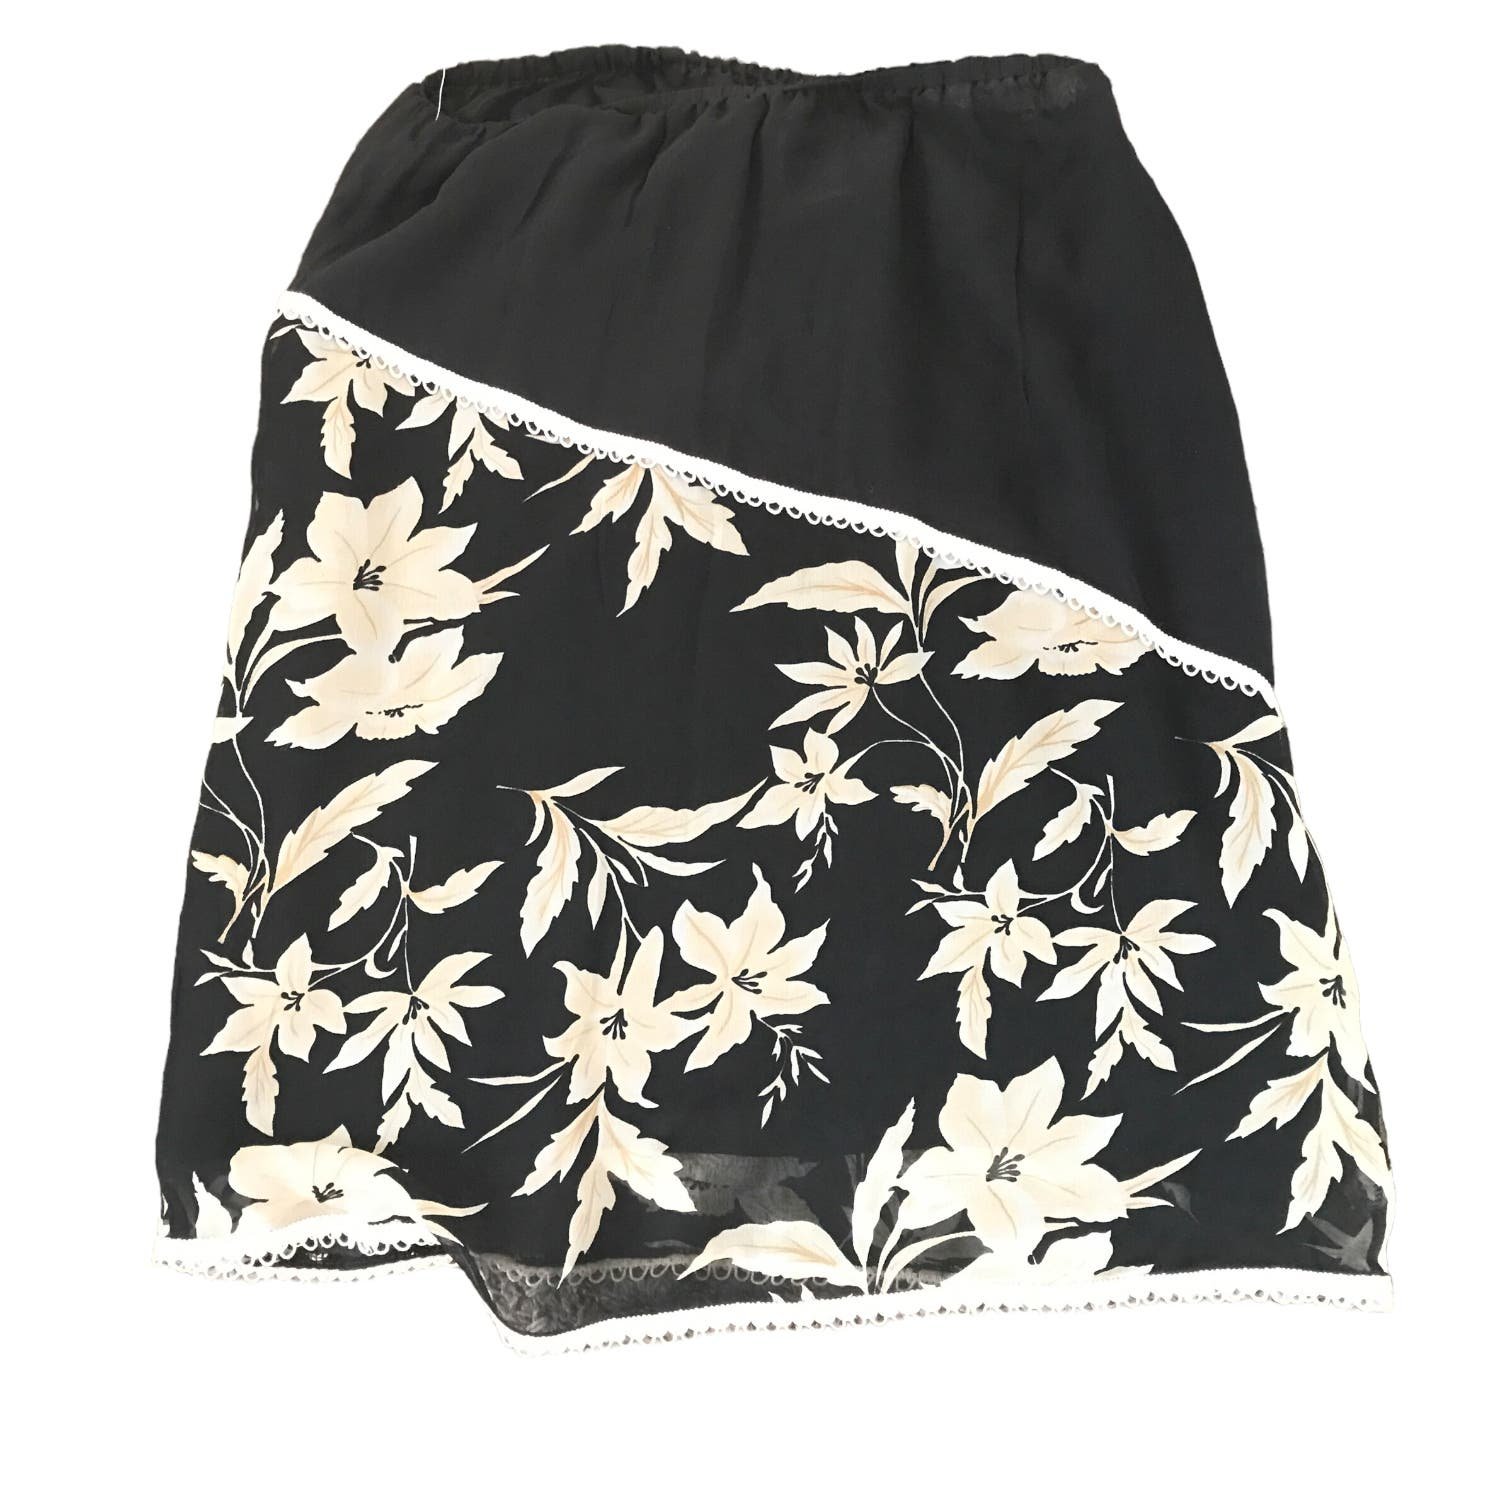 Authentic Quo Silk 100% Silk Black And Cream Floral Color Block Sheer Skirt US SZ M N50GZqT3Y High Quaity